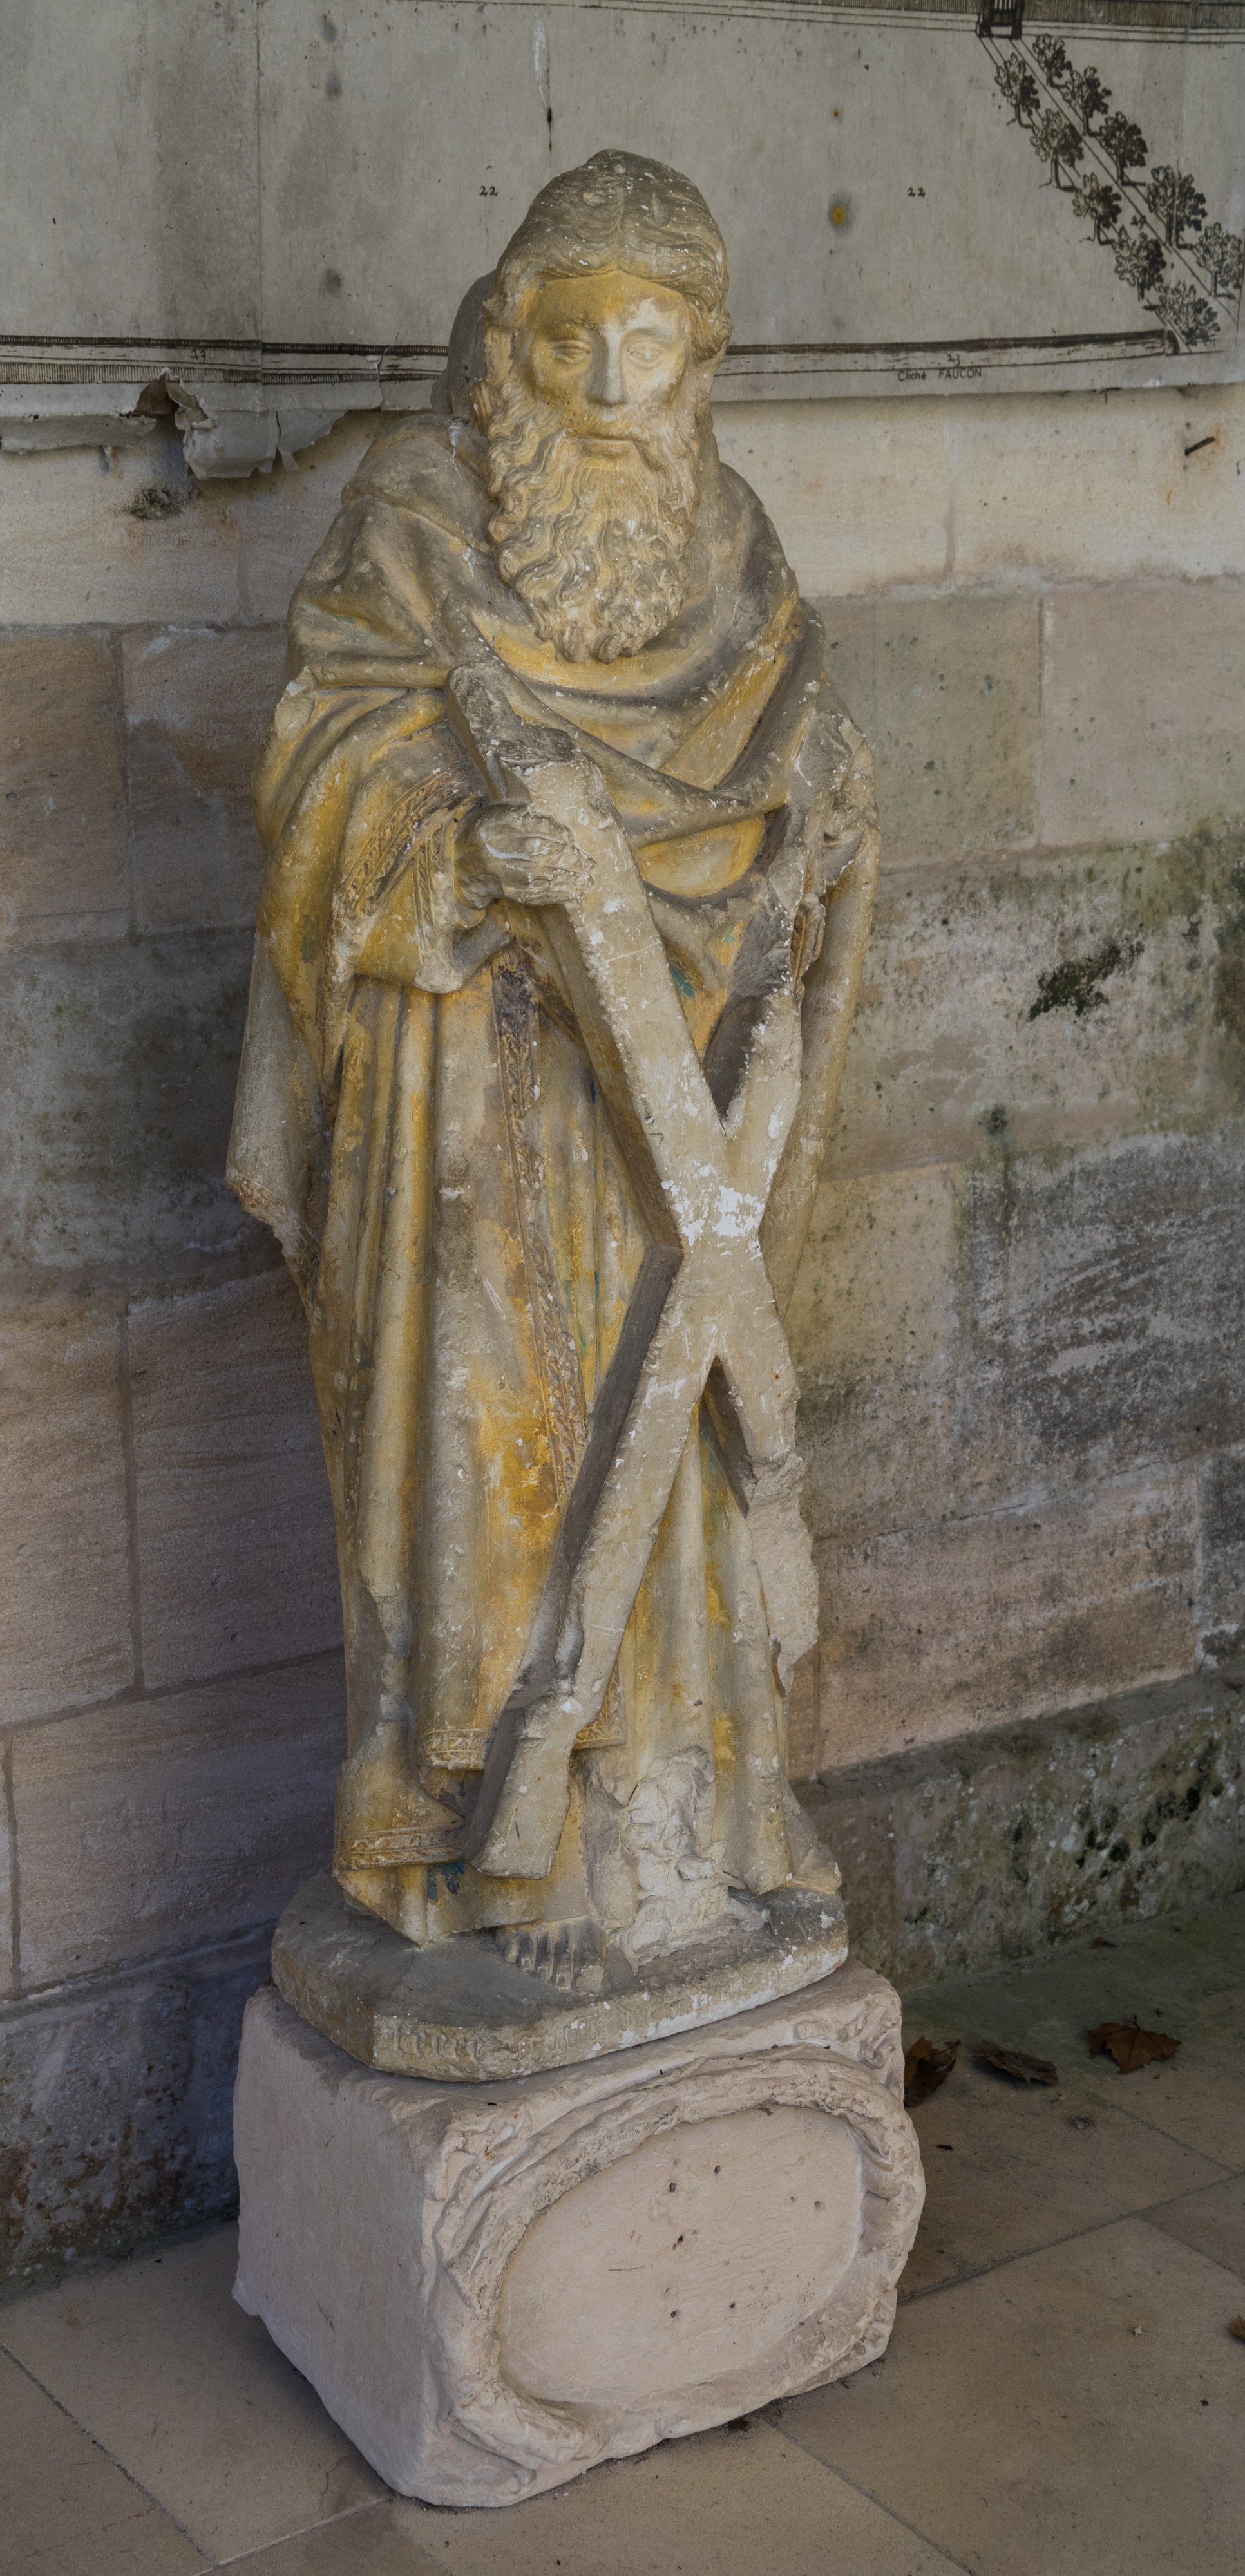 Bec-Hellouin saint Andrew statue cloister